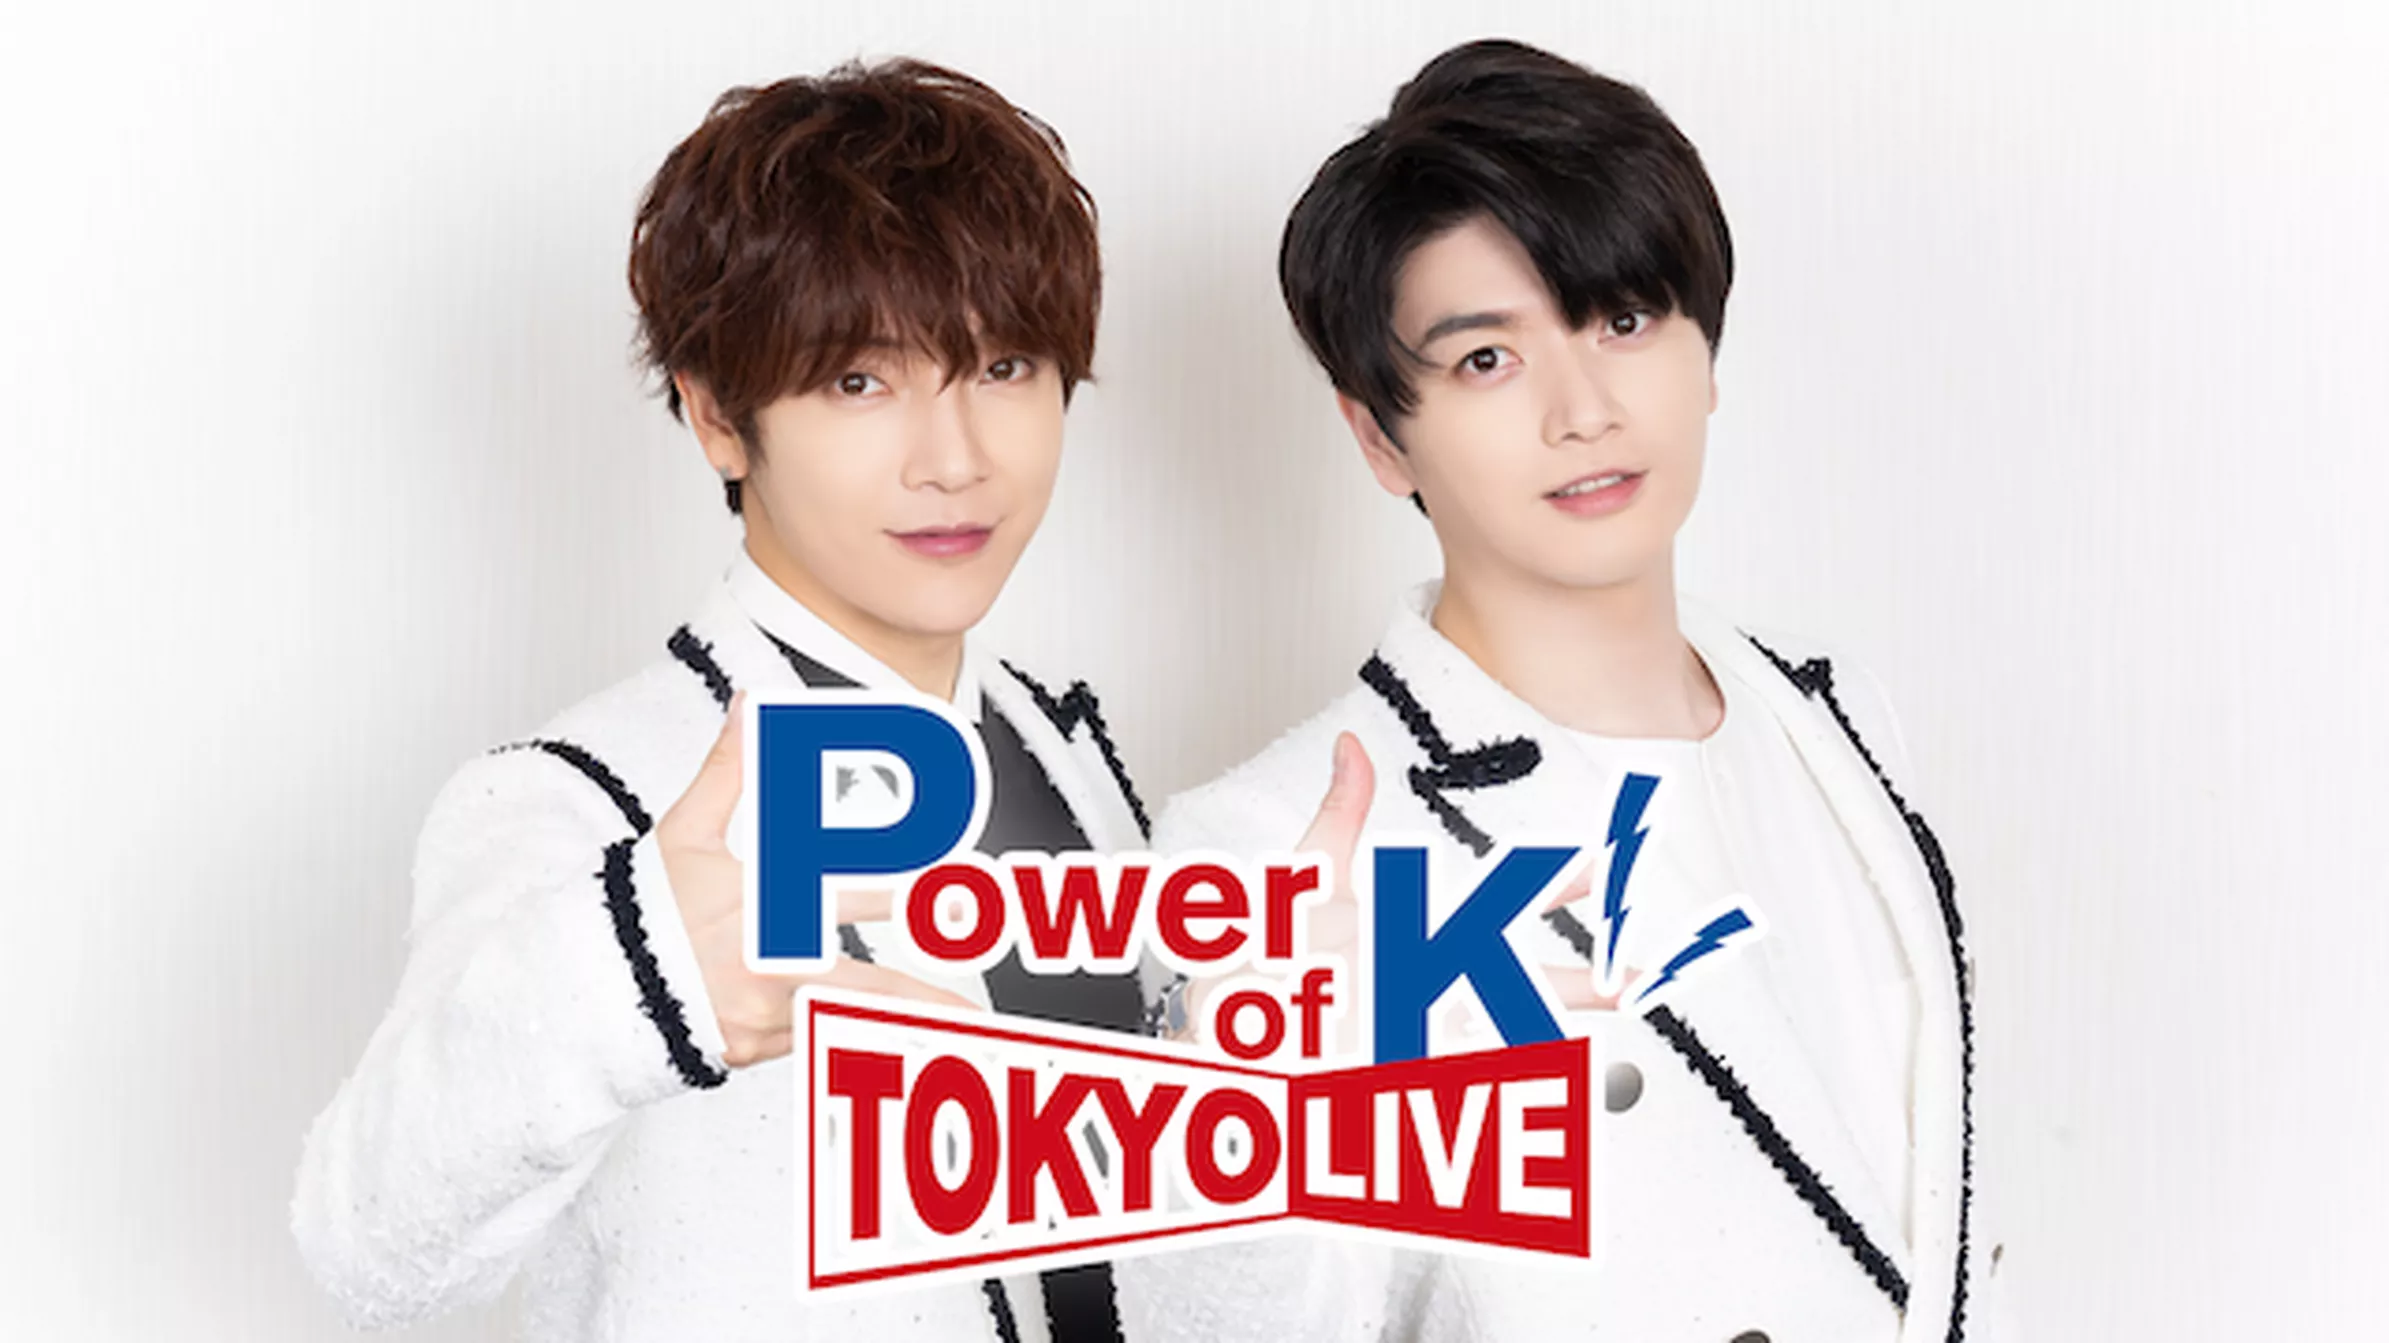 Power of K TOKYO LIVE